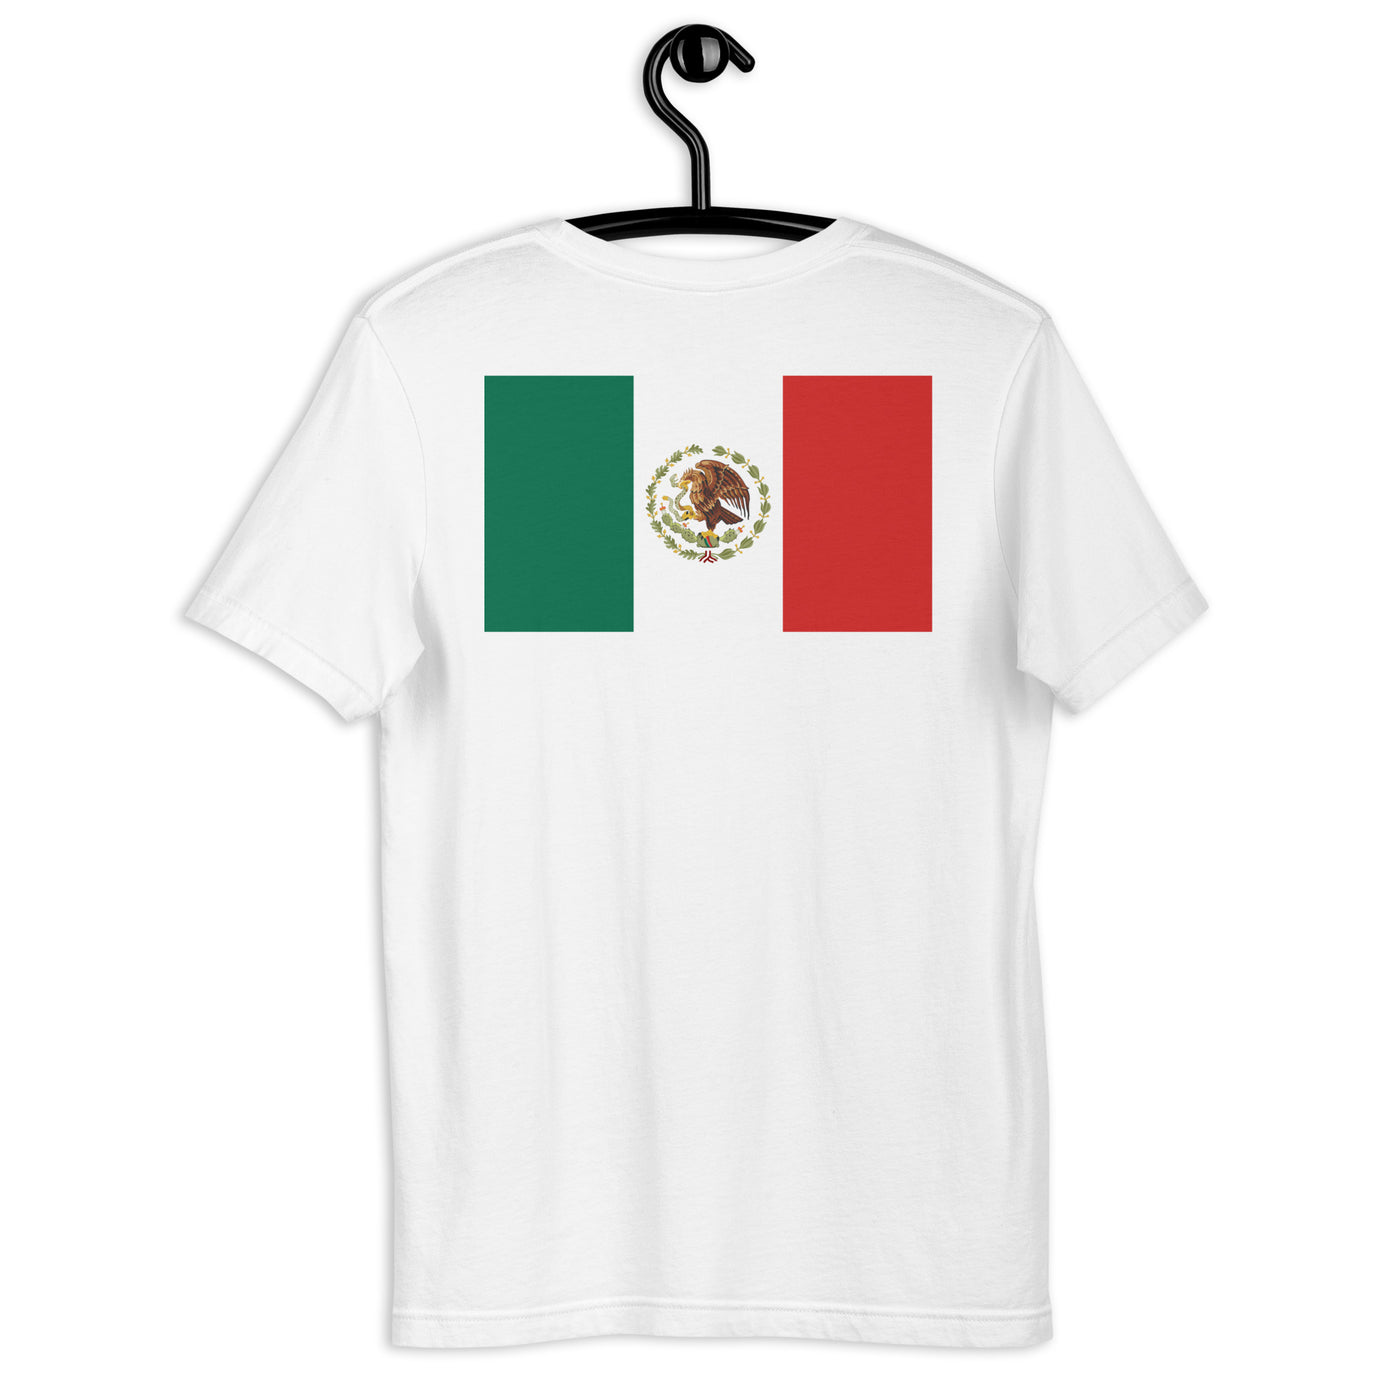 MEXICO POR VIDA GRAFFITI Unisex t-shirt